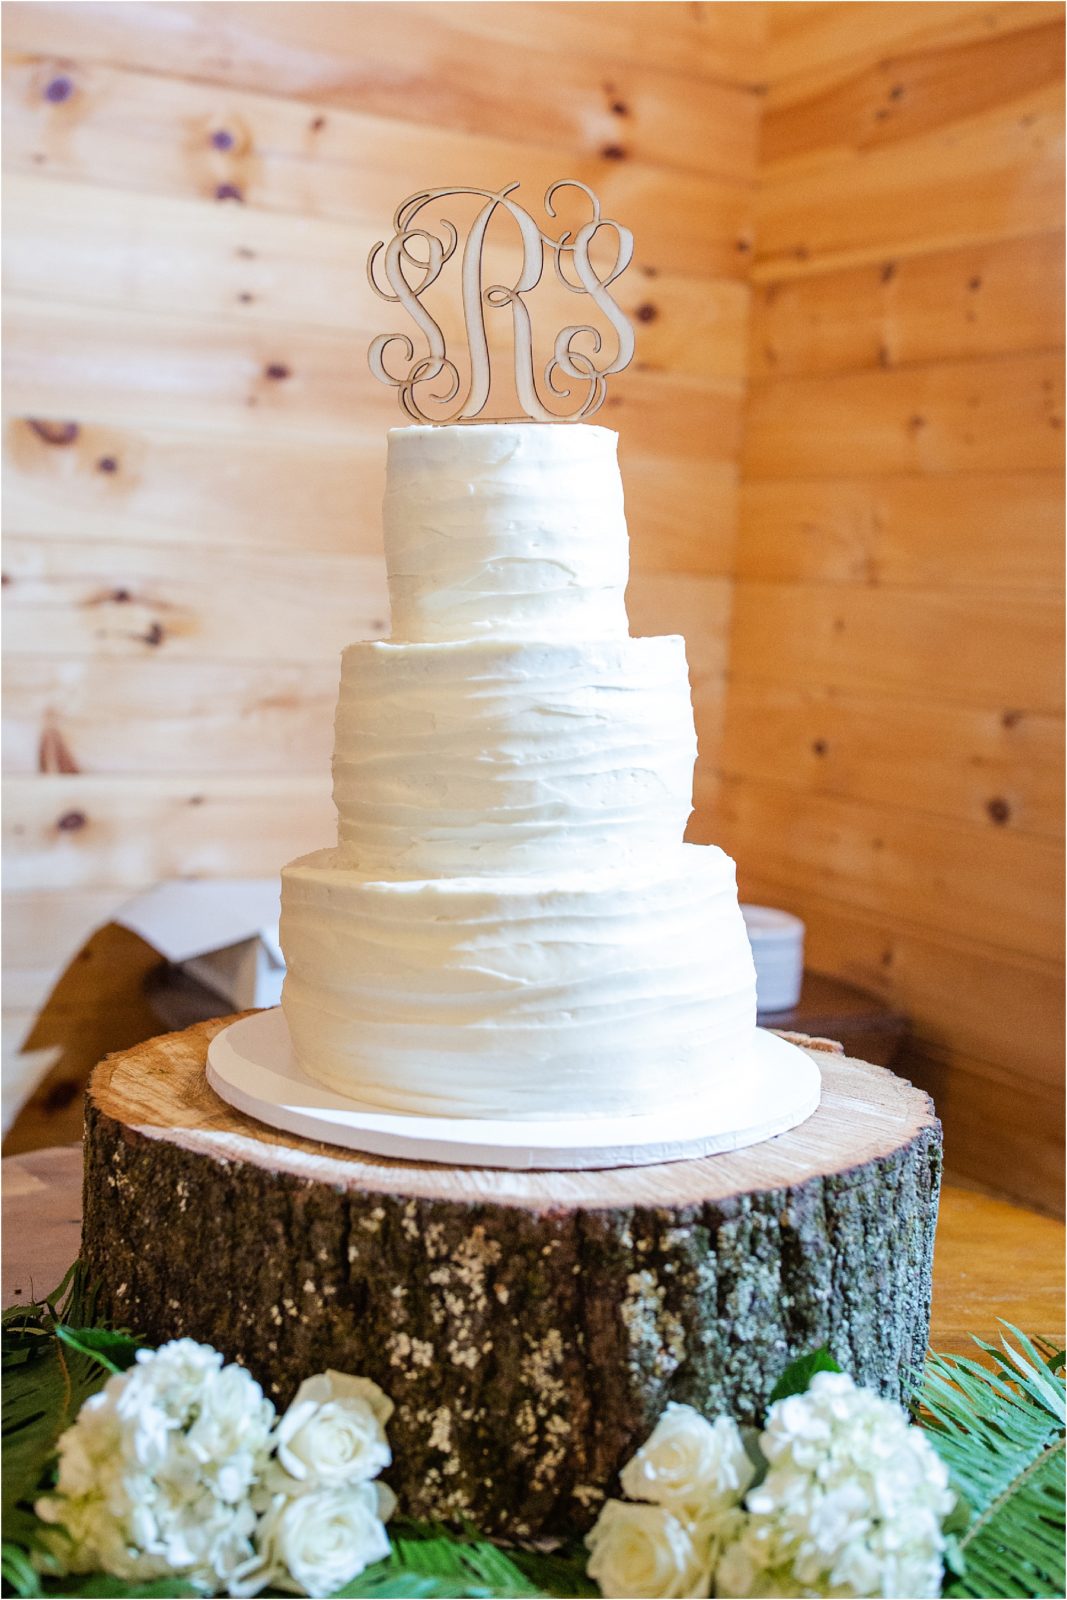 Wedding cake on wood slab